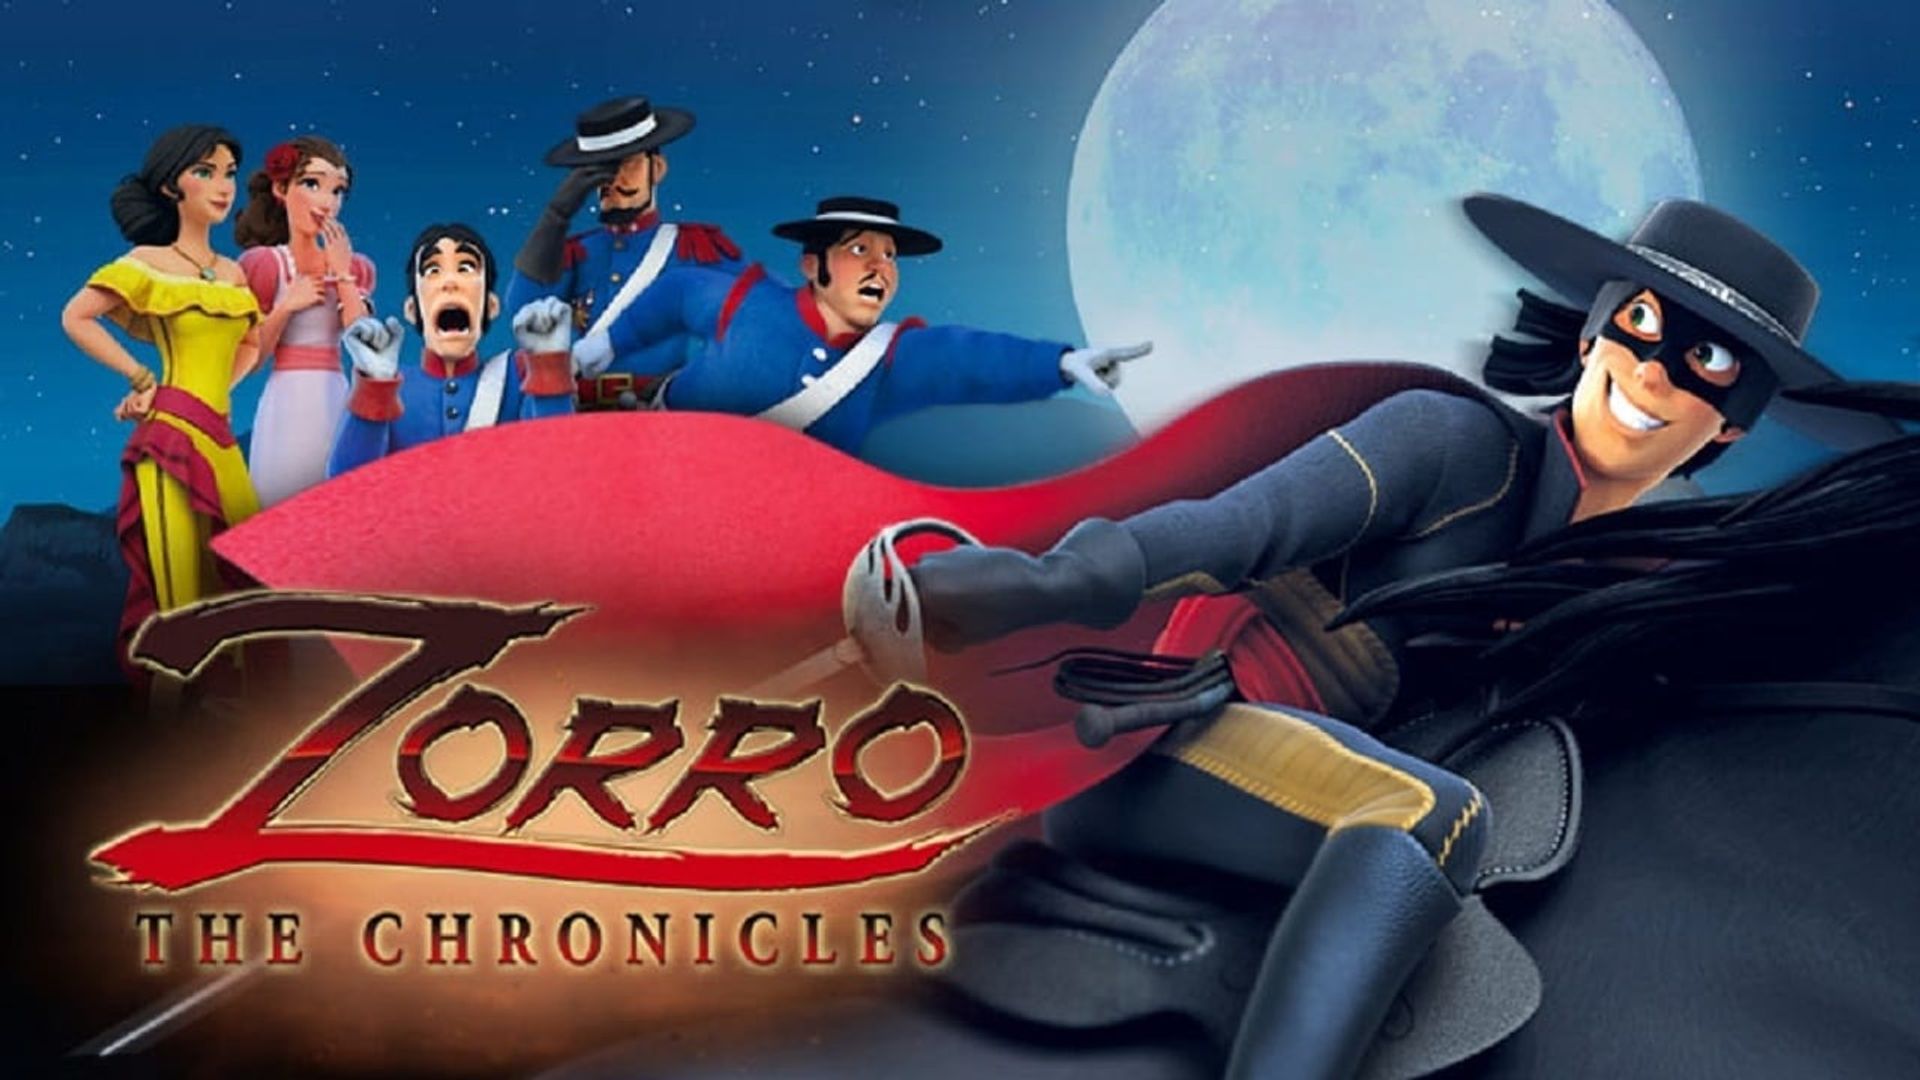 Zorro the Chronicles background